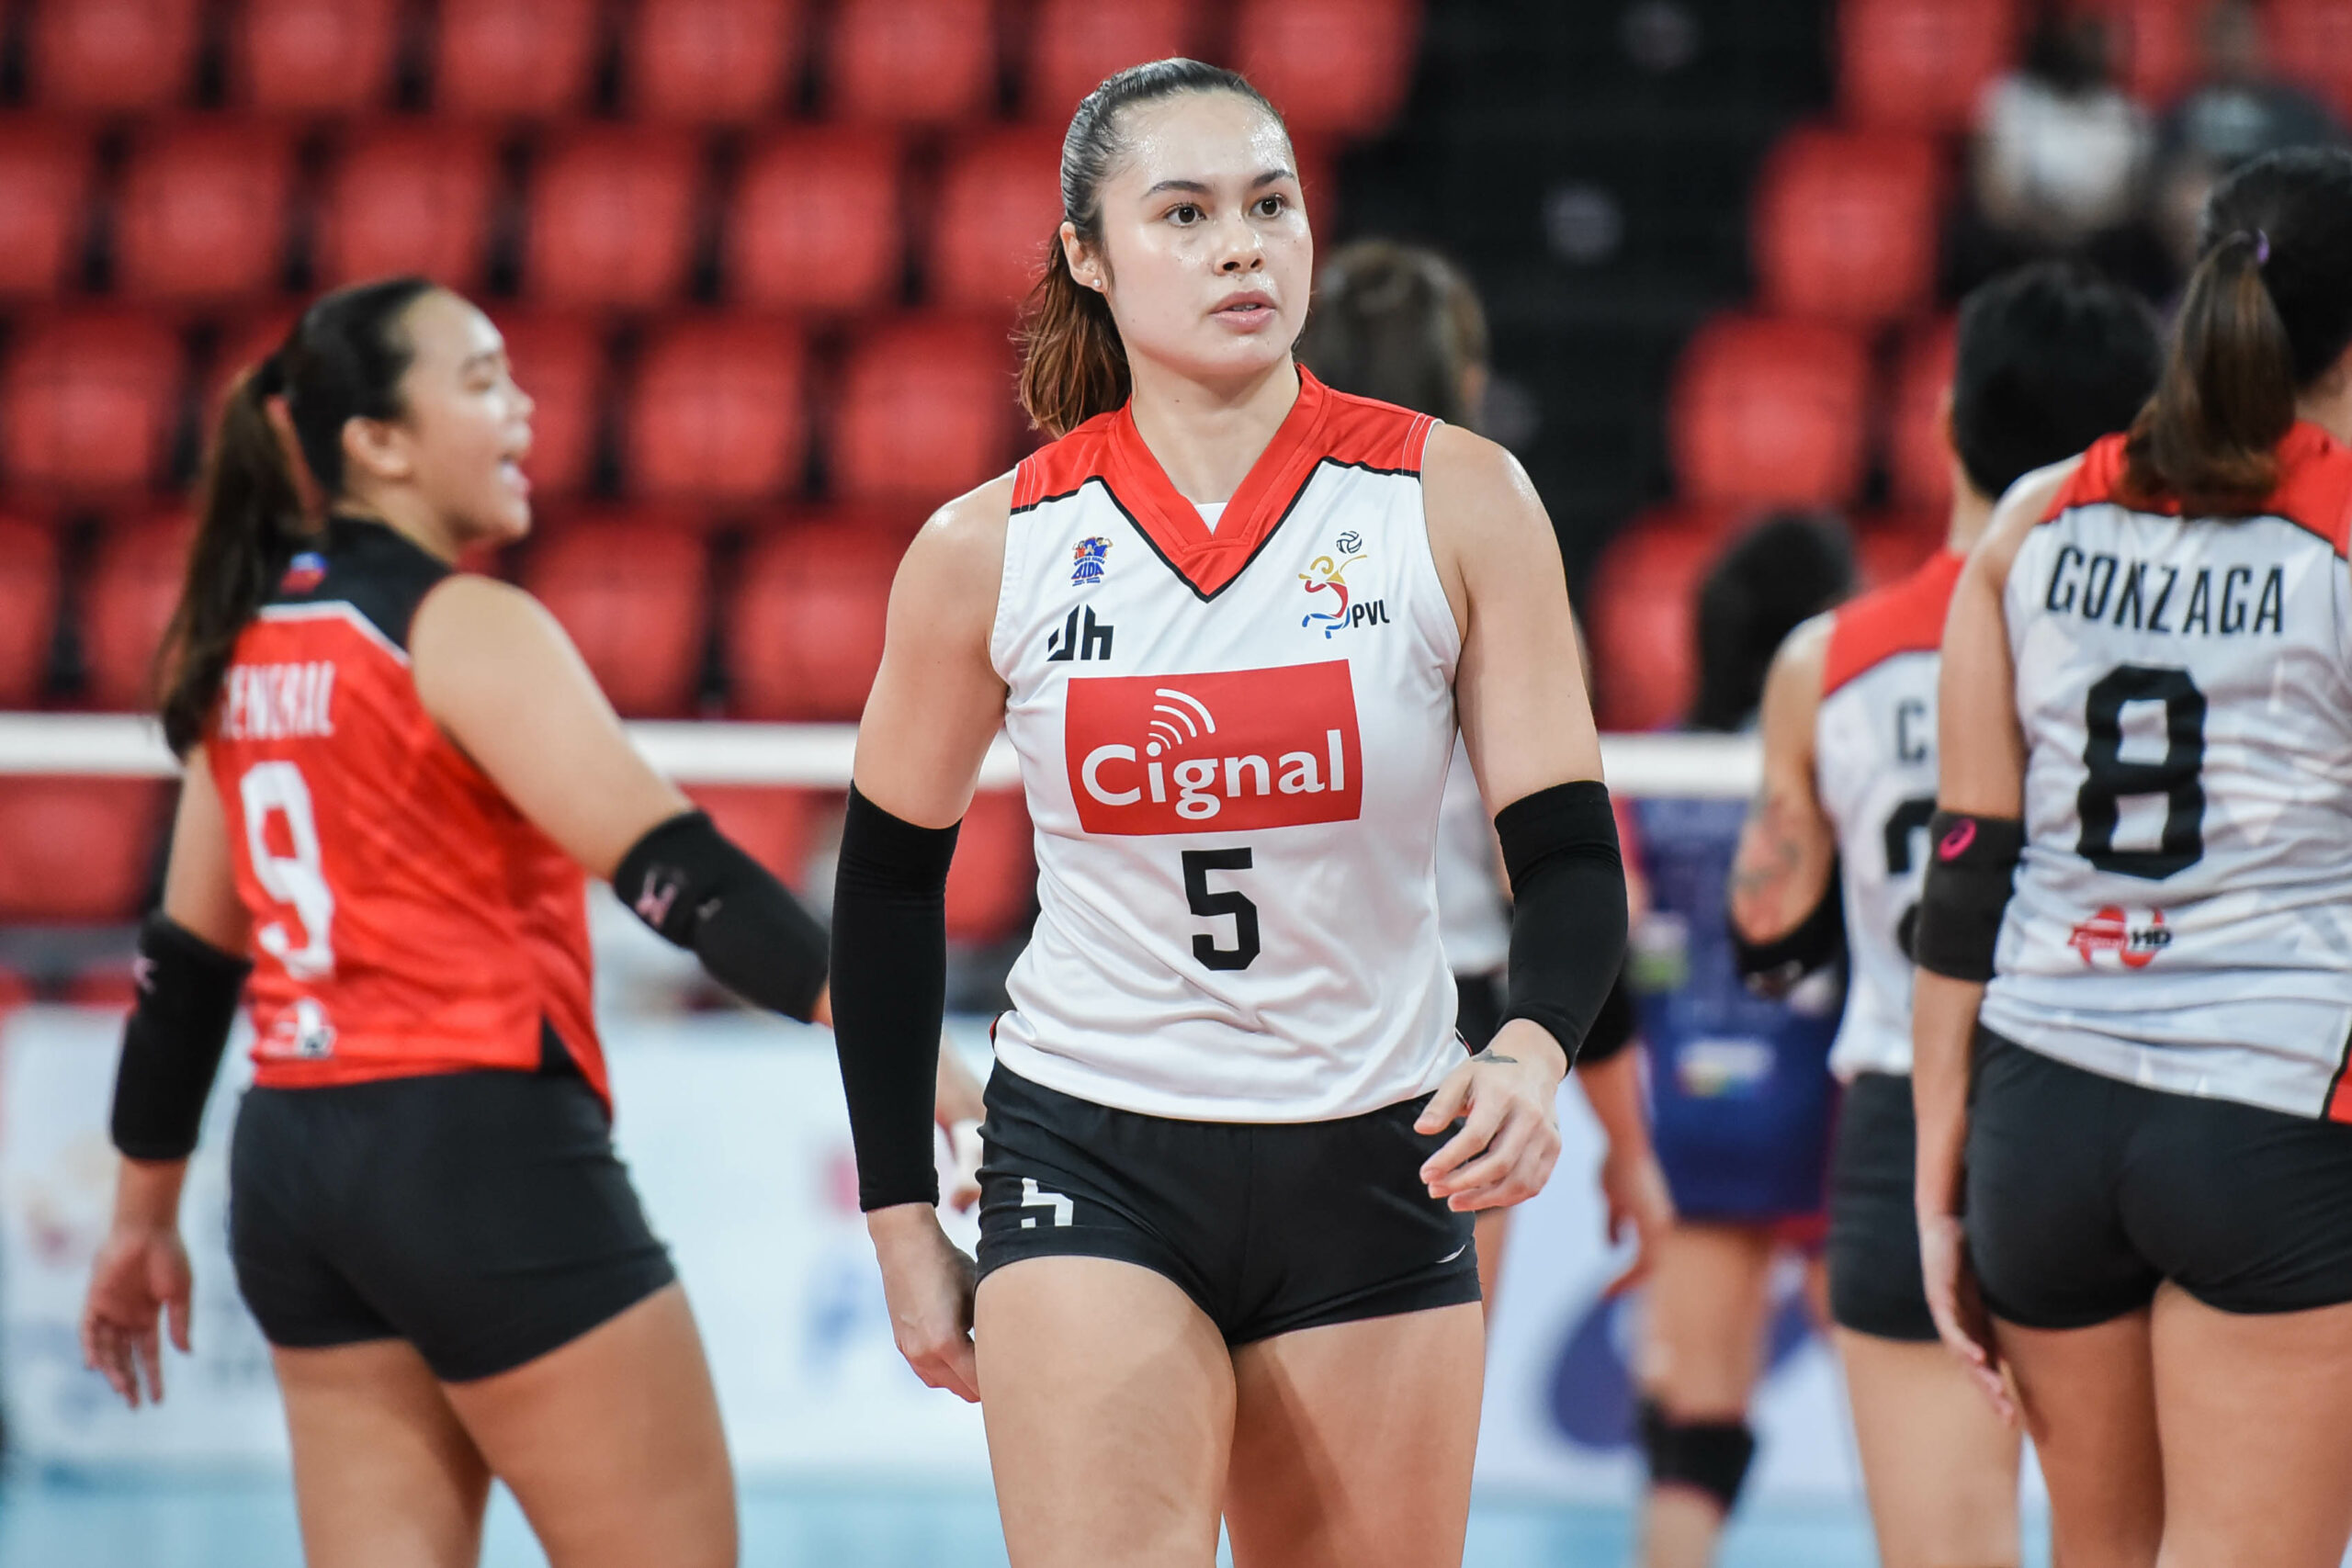 PVL-AFC-Cignal-vs.-Gerflor-Vanie-Gandler-8546-scaled Cignal needs determination over skill against Choco Mucho, says Shaq News PVL Volleyball  - philippine sports news